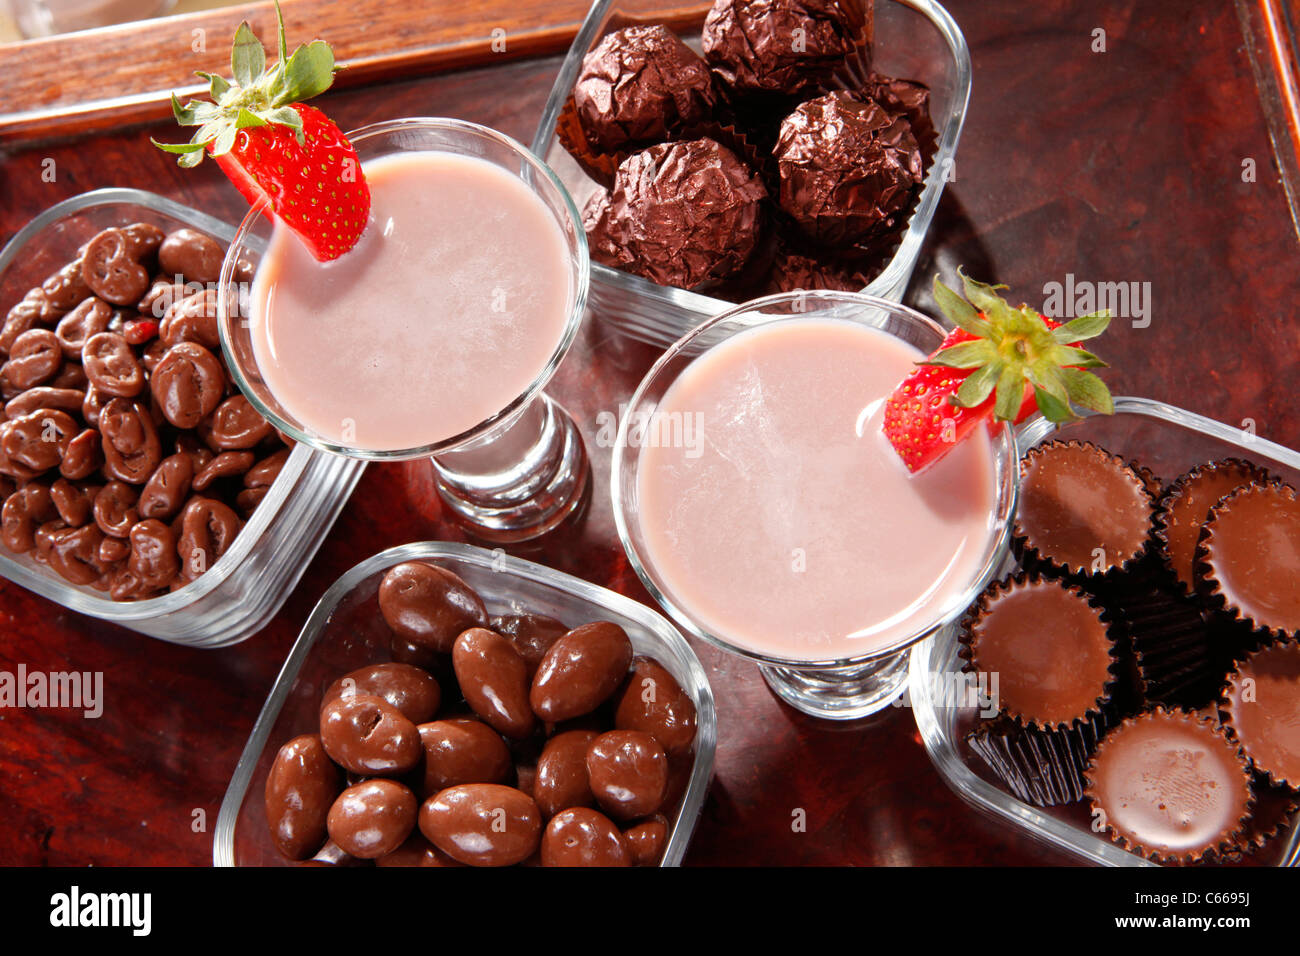 Chocolate cream liquor and assorted cocoa treats Stock Photo